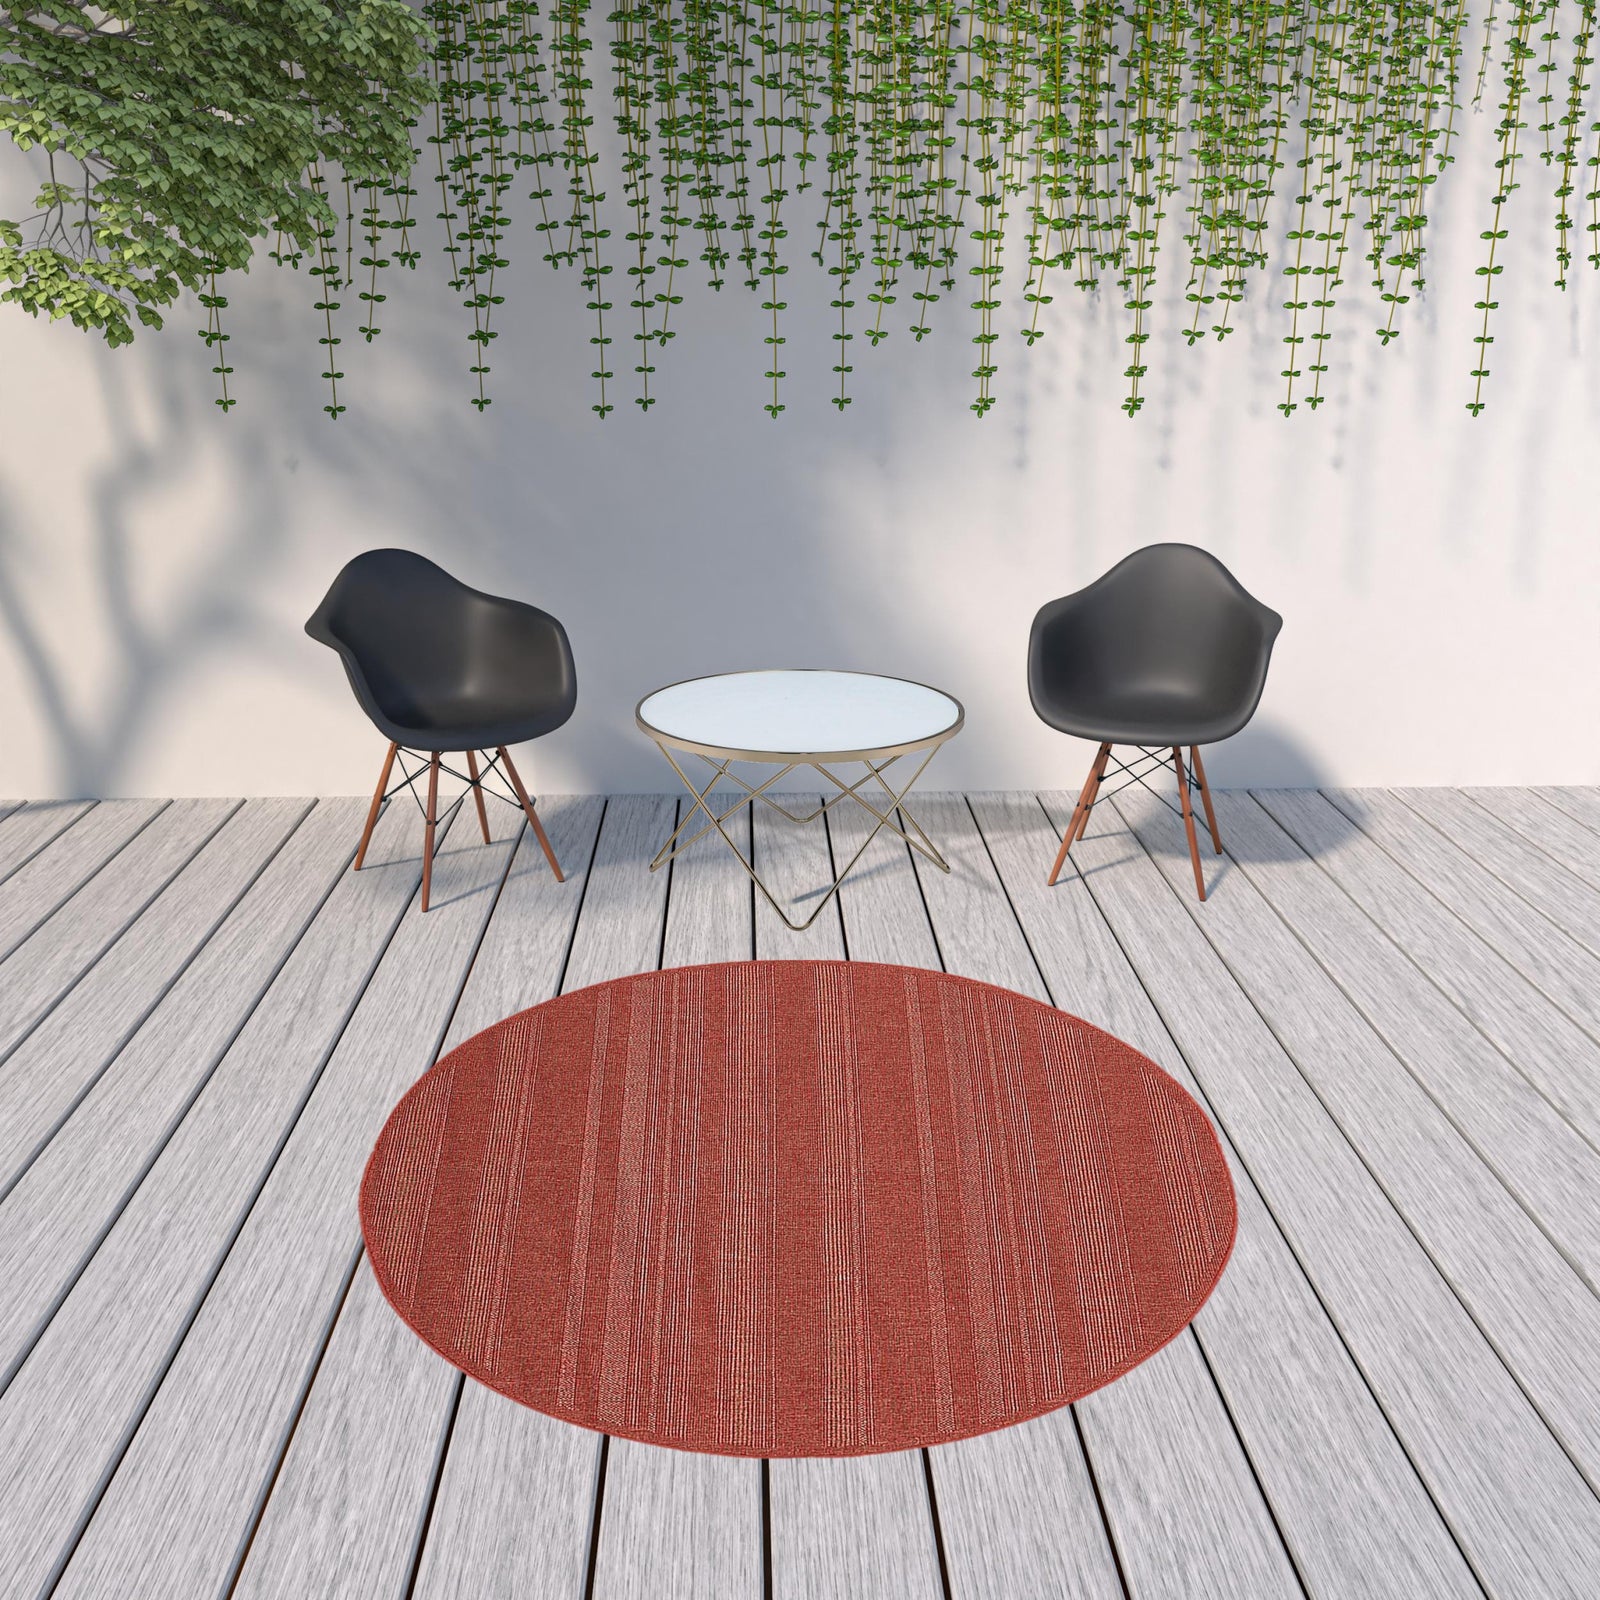 8' Red Round Stain Resistant Indoor Outdoor Area Rug